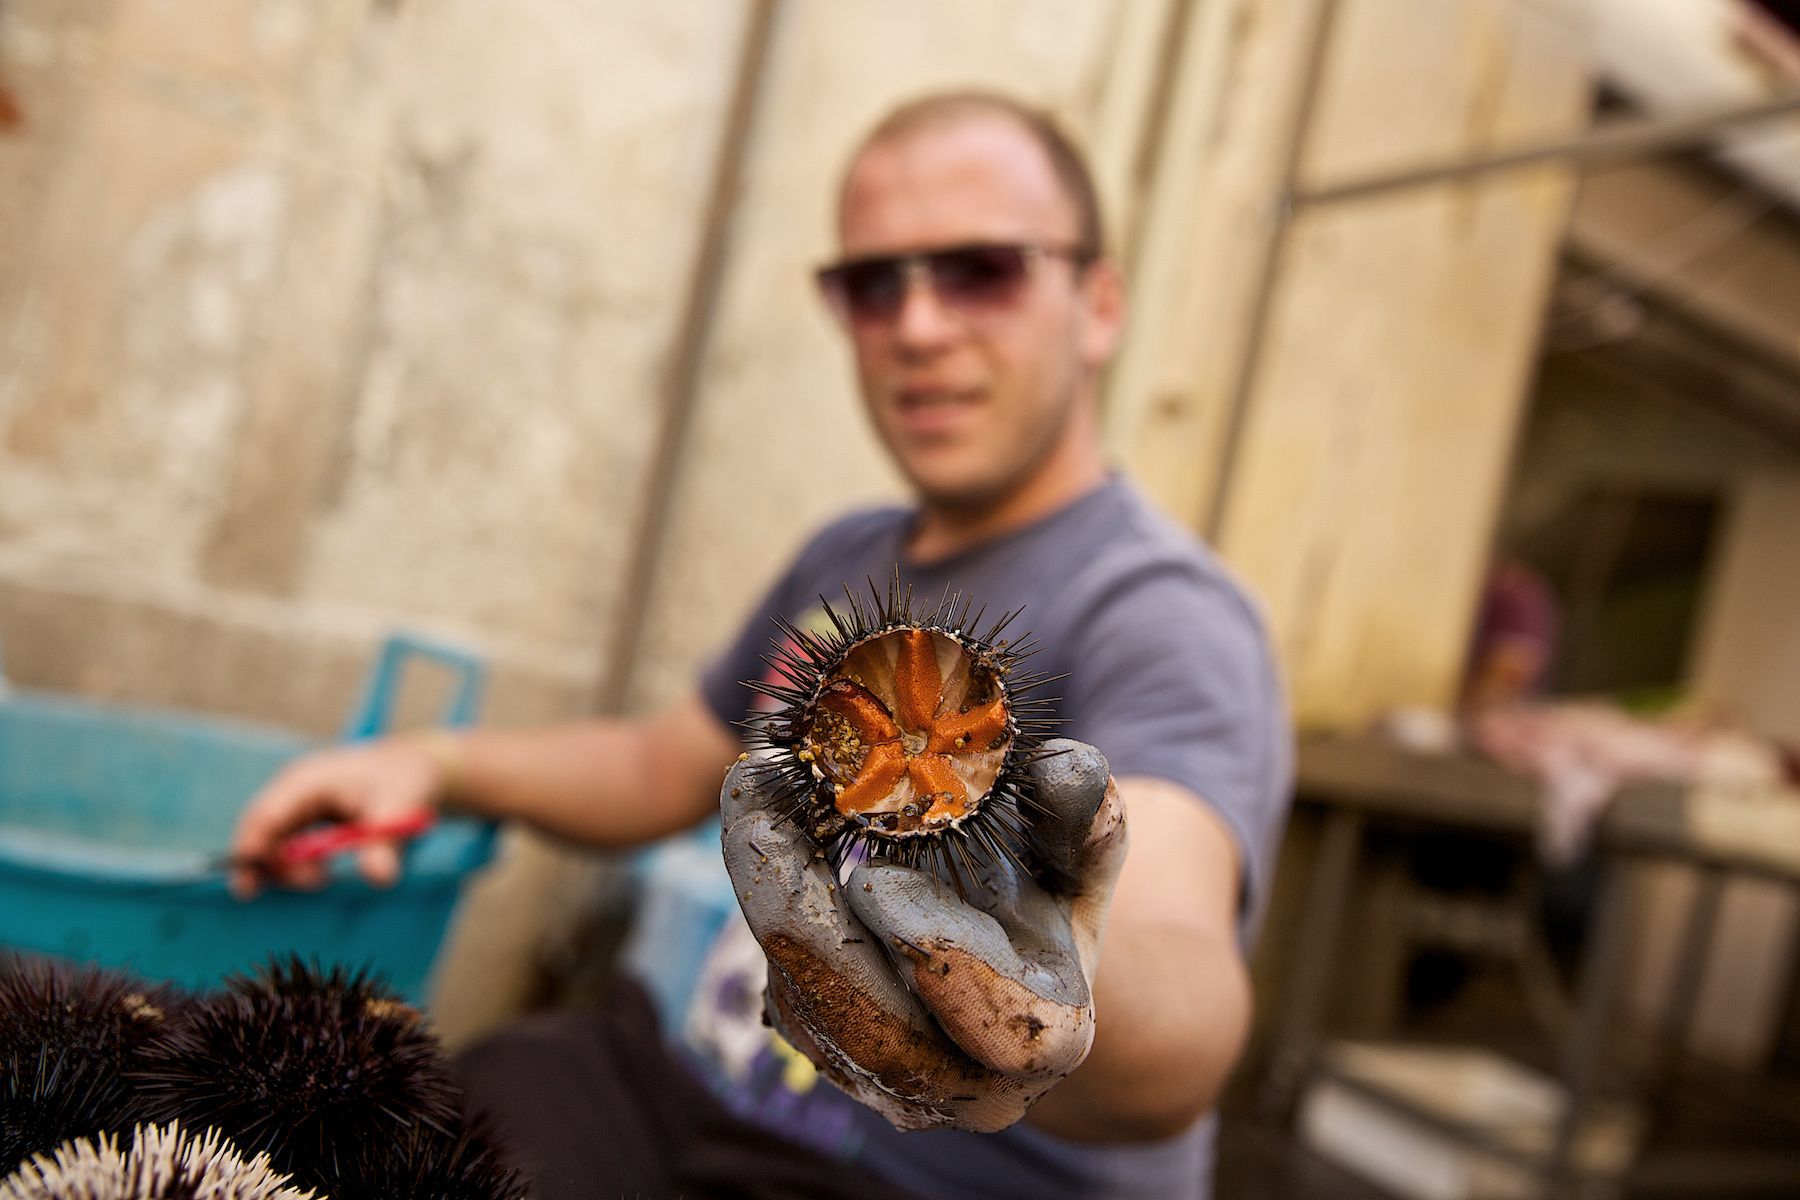 Vendor At  a Fish Market With Sea Urchin